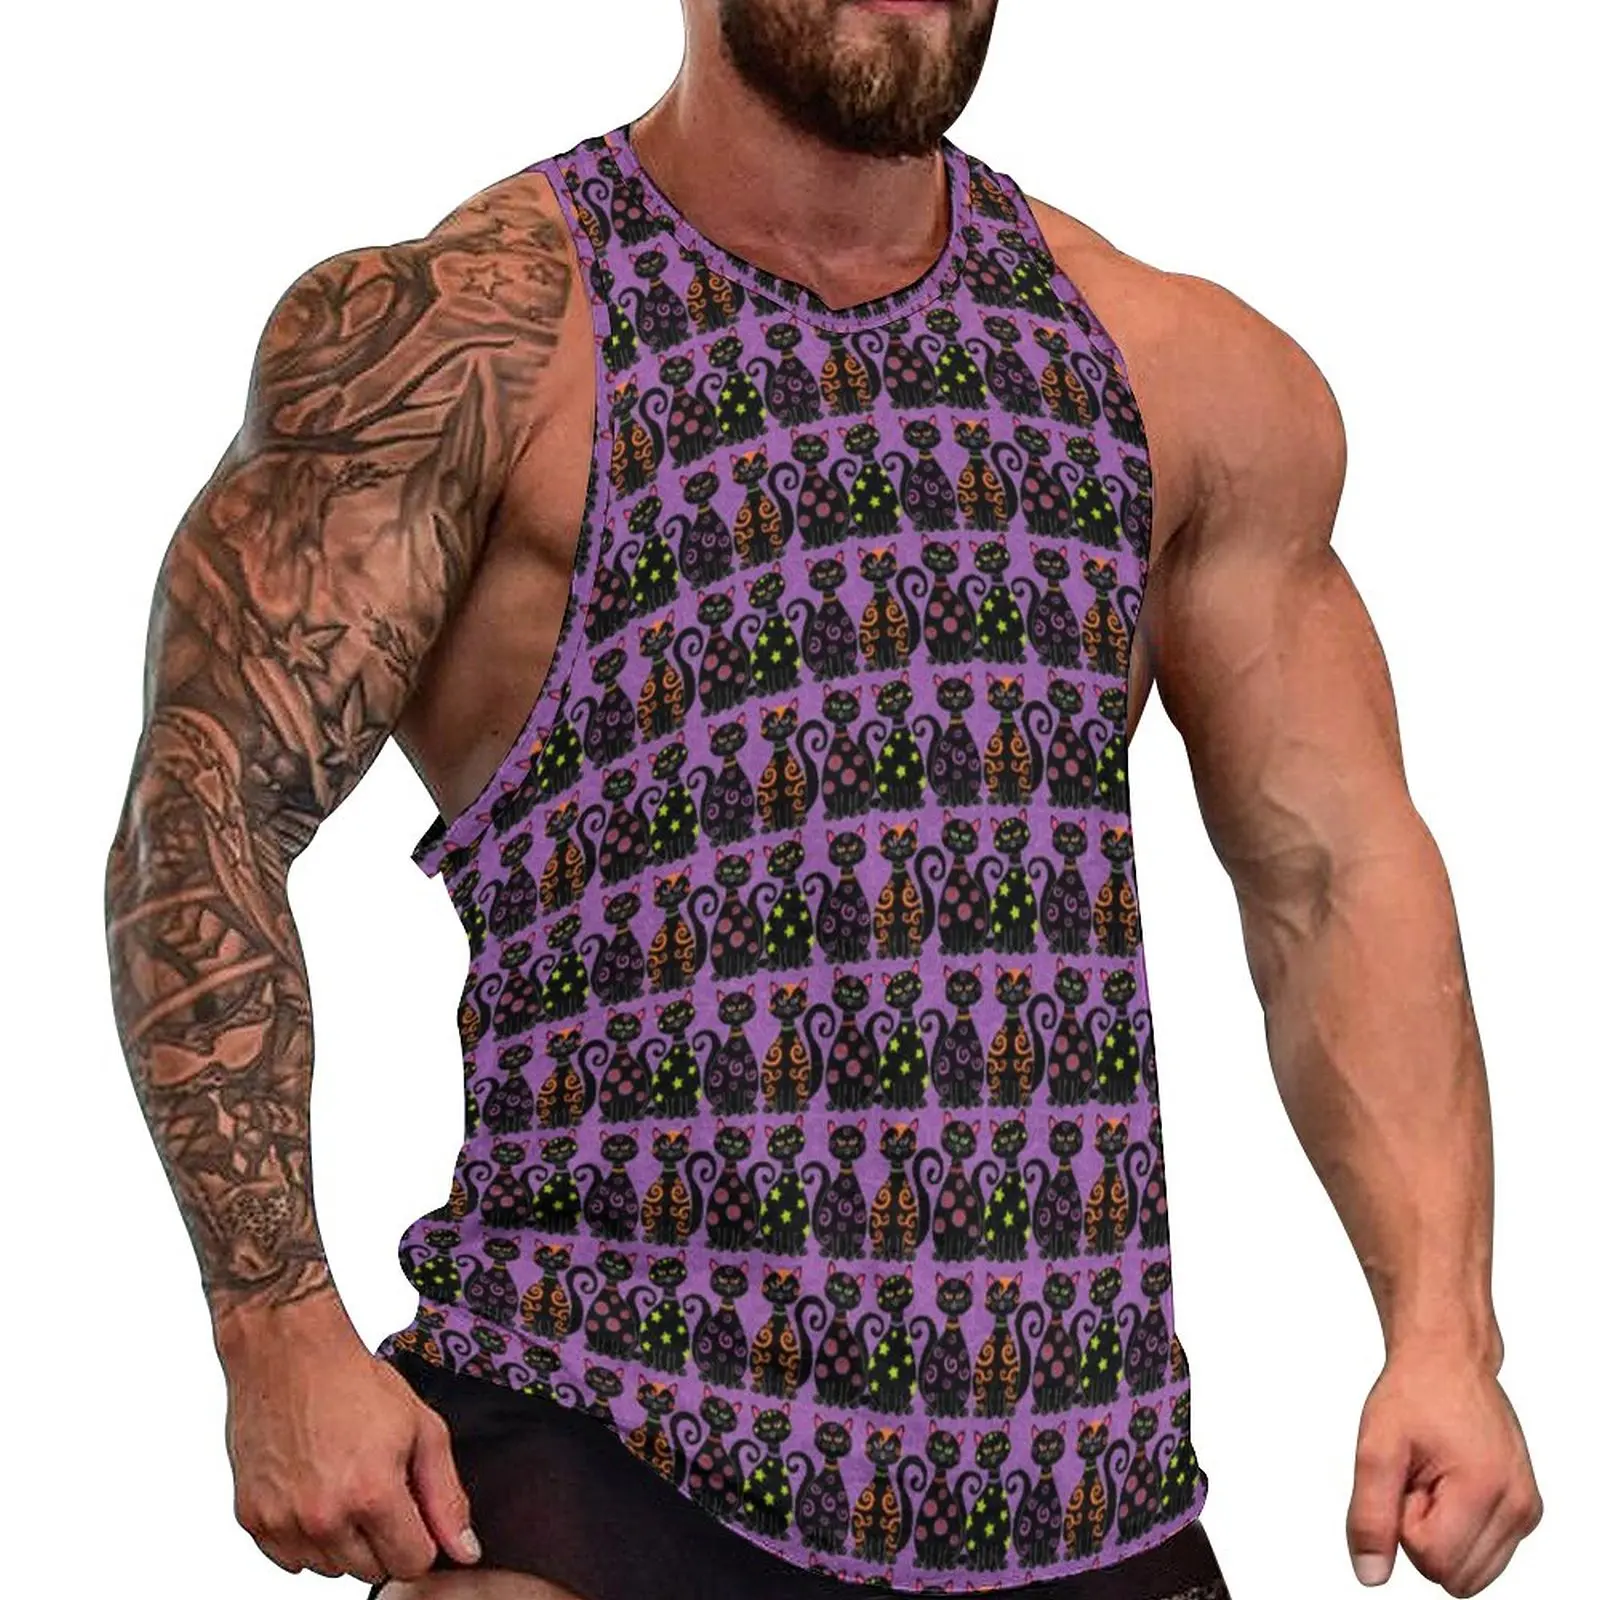 

Halloween Black Cat Tank Top Man's Cute Kitty Cool Tops Beach Bodybuilding Graphic Sleeveless Shirts Big Size